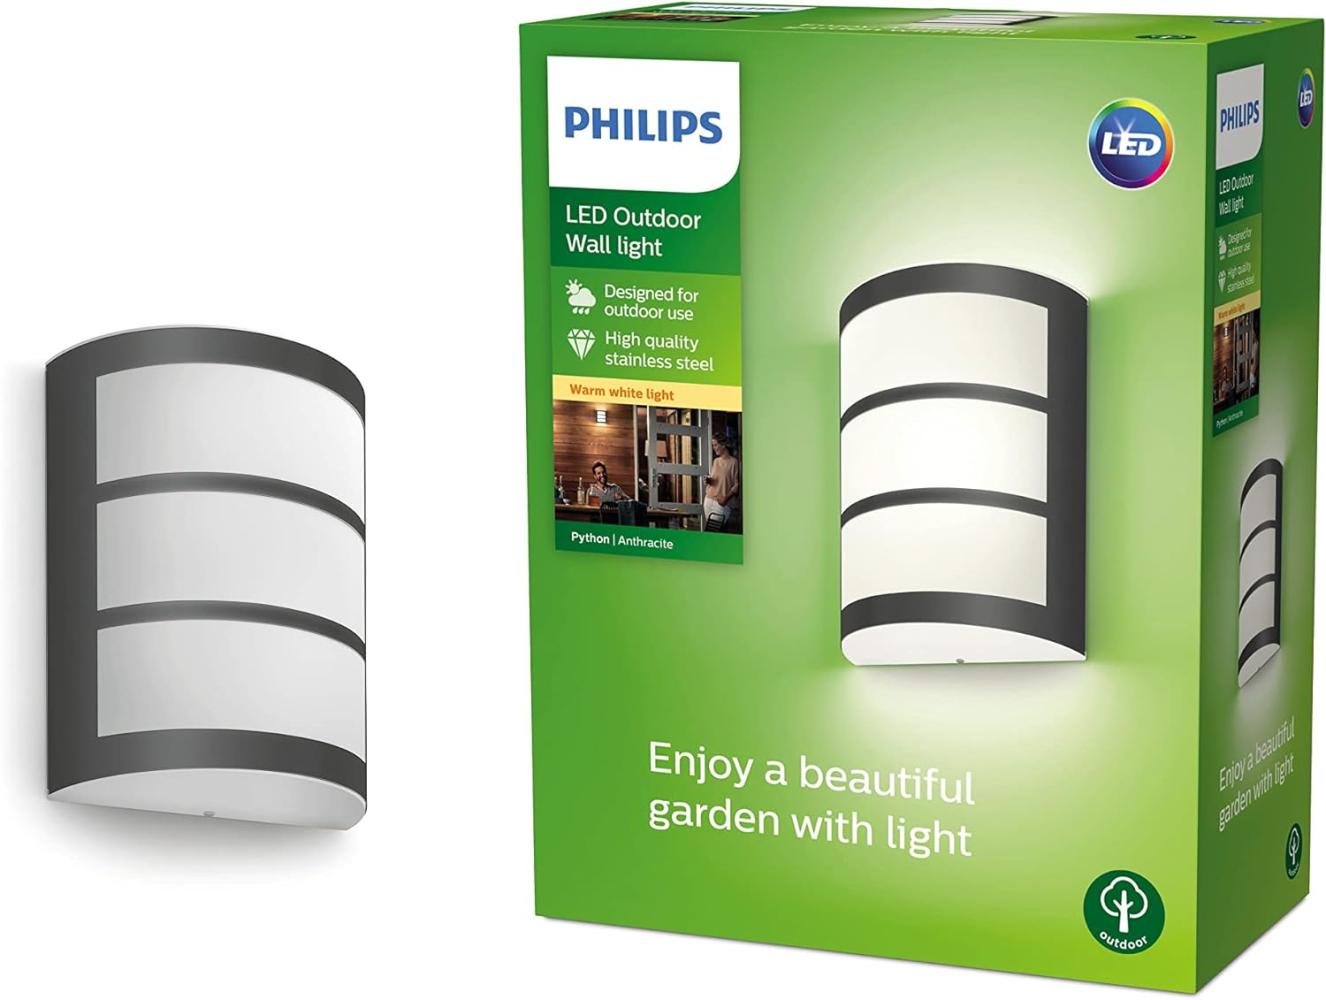 Philips Python Wall 2700K Anthrazit Bild 1